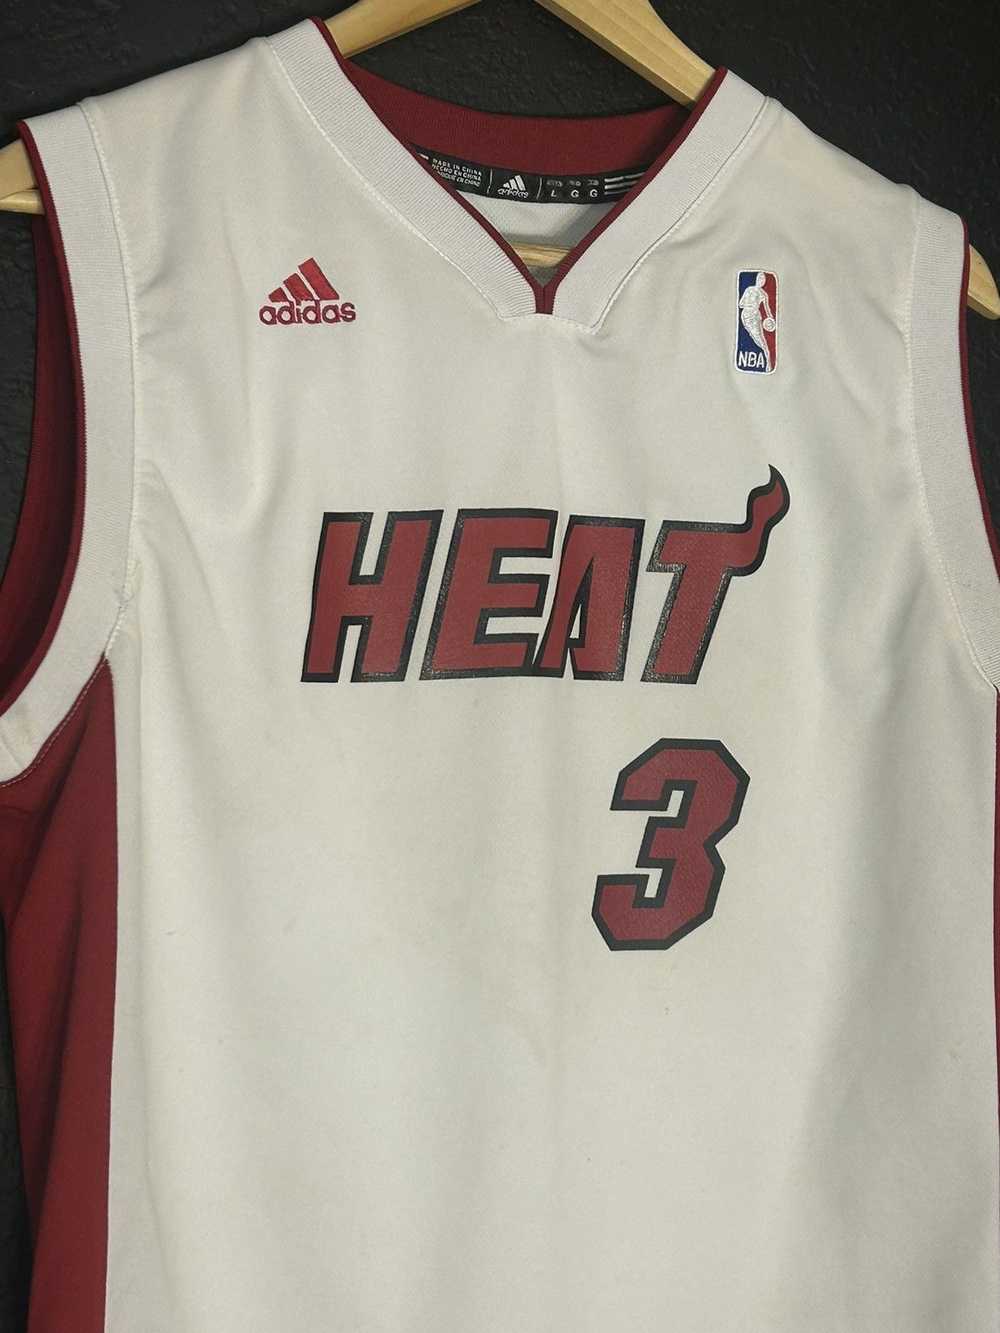 Adidas × NBA Miami Heat Dwyane Wade #3 Jersey - image 2